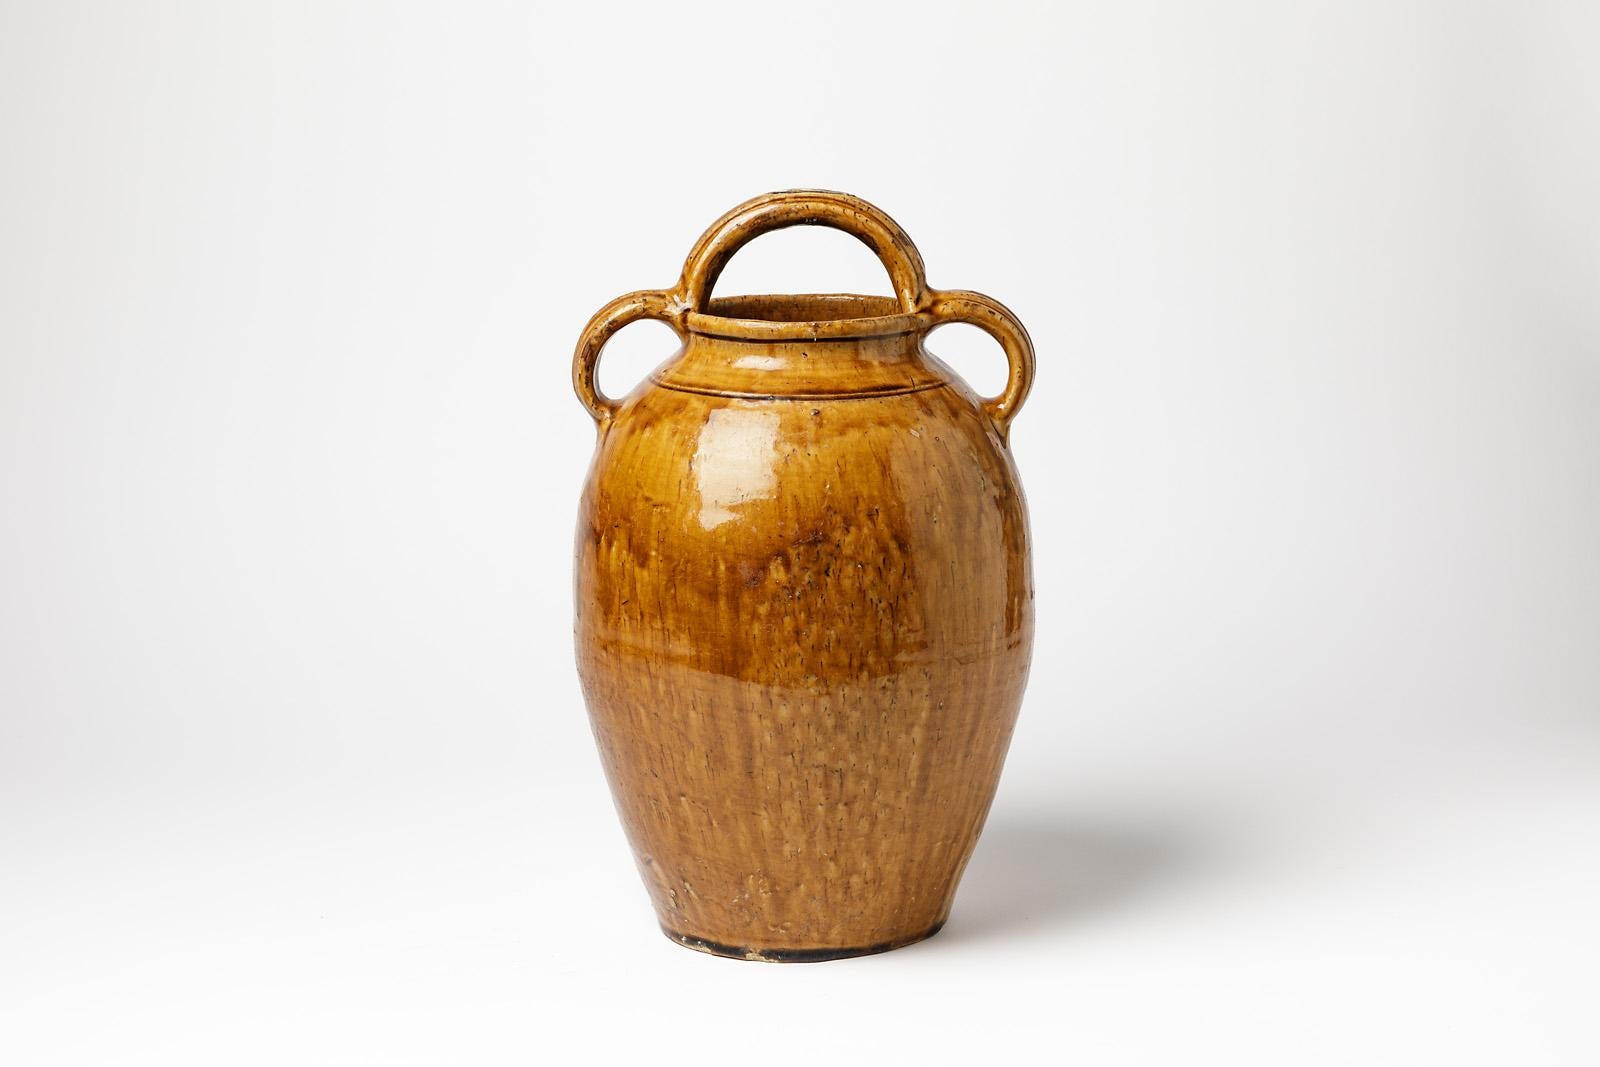 French 19th Century Yellow Stoneware Ceramic Pitcher or Vase by La Borne Pottery